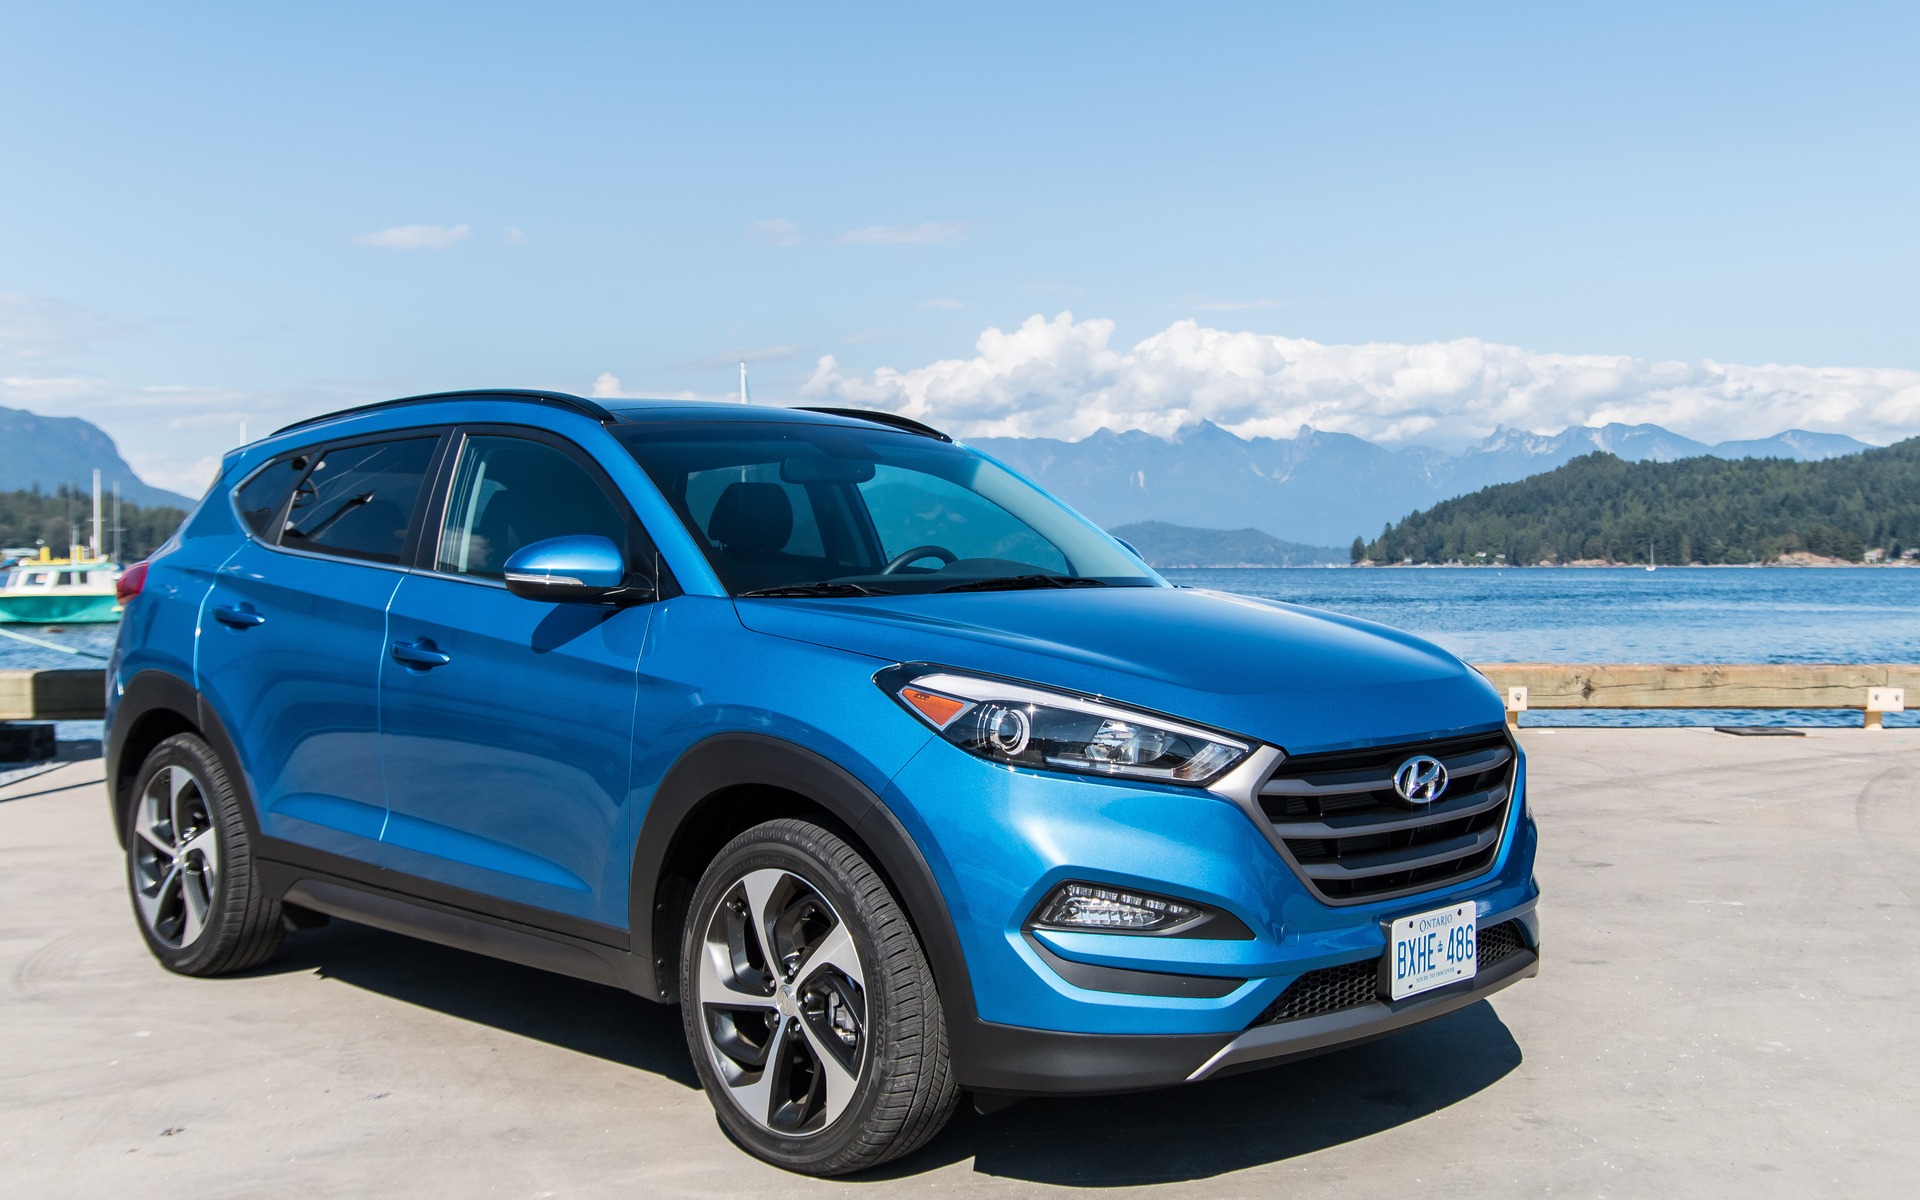 Recall For The 2016 Hyundai Tucson The Car Guide.